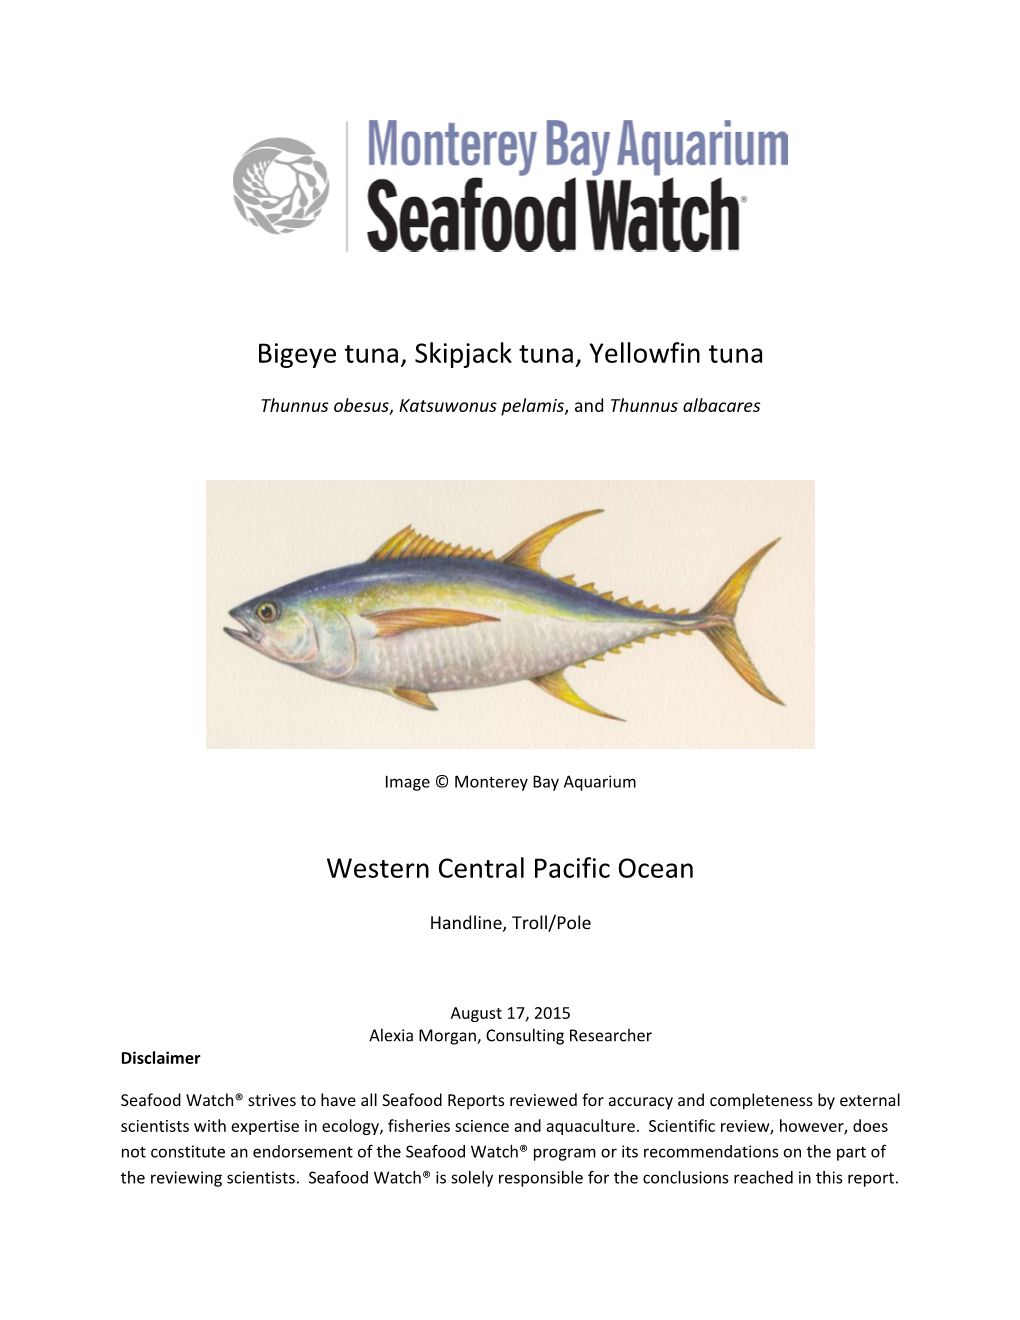 Bigeye Tuna, Skipjack Tuna, Yellowfin Tuna Western Central Pacific Ocean